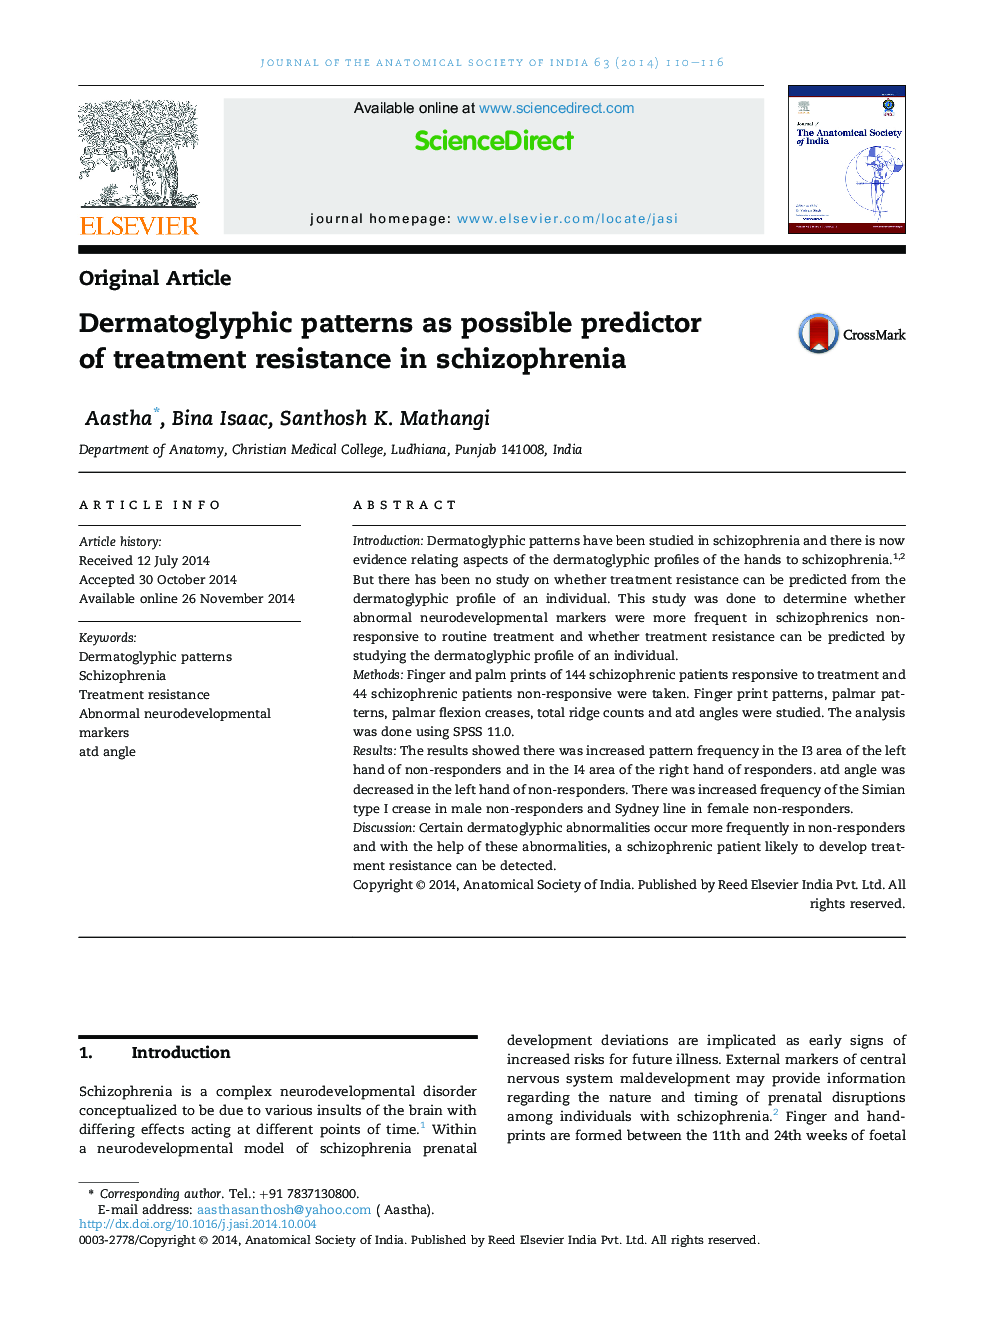 Dermatoglyphic patterns as possible predictor ofÂ treatment resistance in schizophrenia